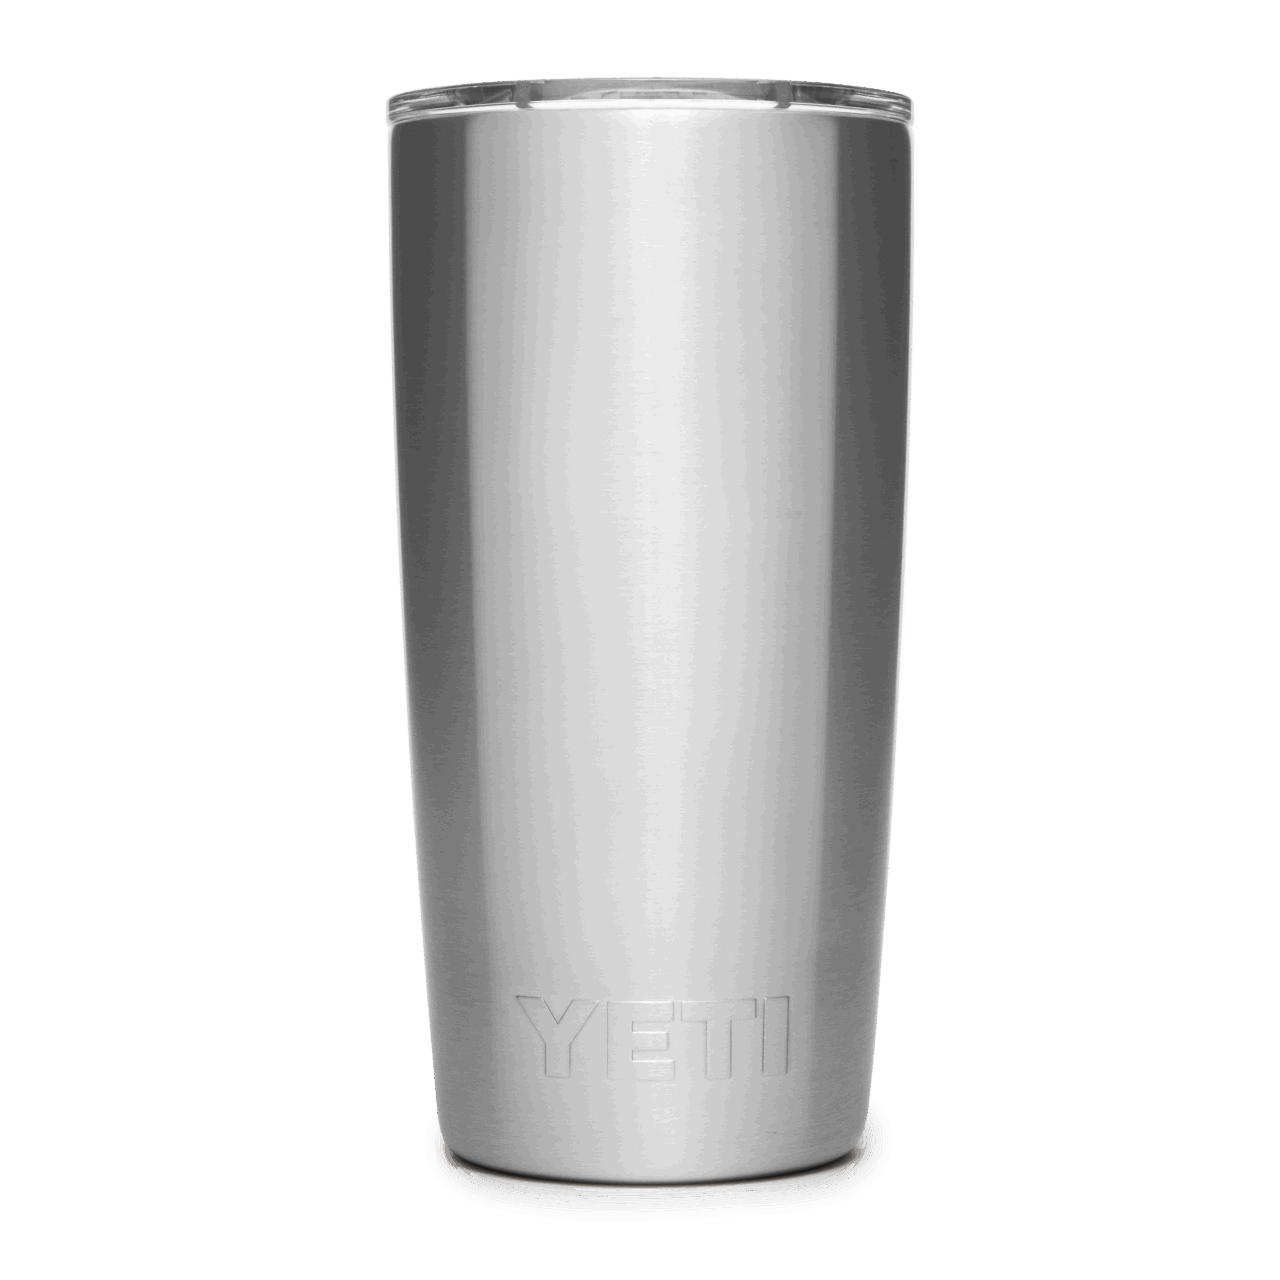 YETI Rambler 10 oz (300ml) Becher - stainless steel